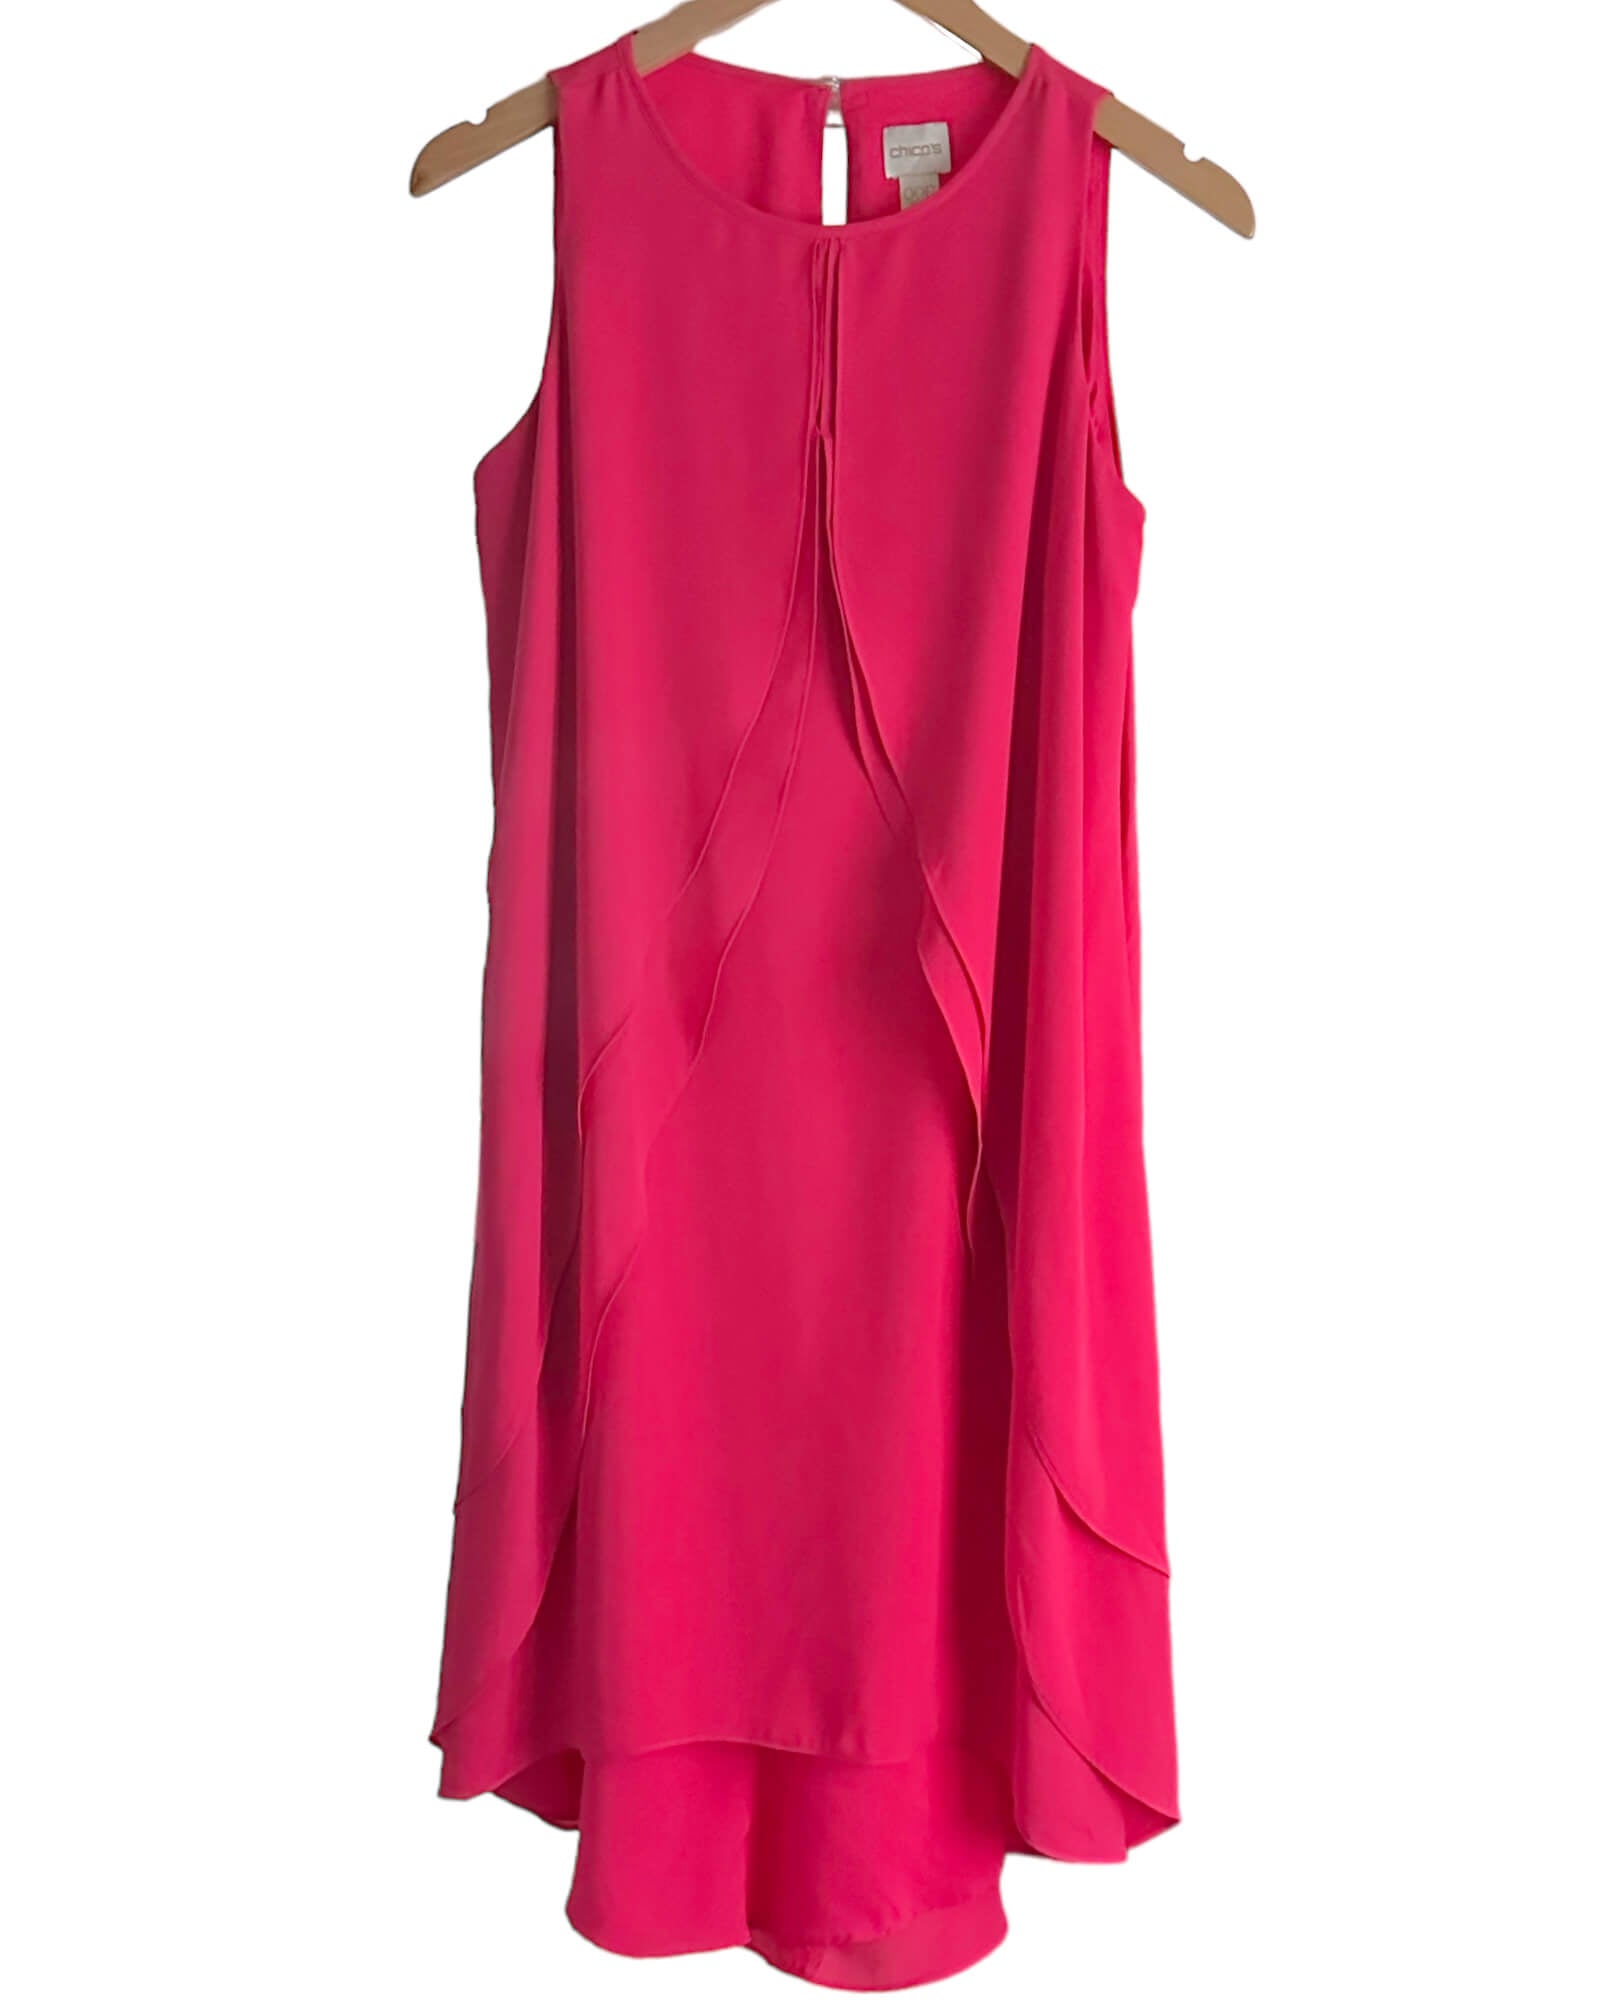 Light Spring CHICO'S tulip pink sleeveless ruffle dress